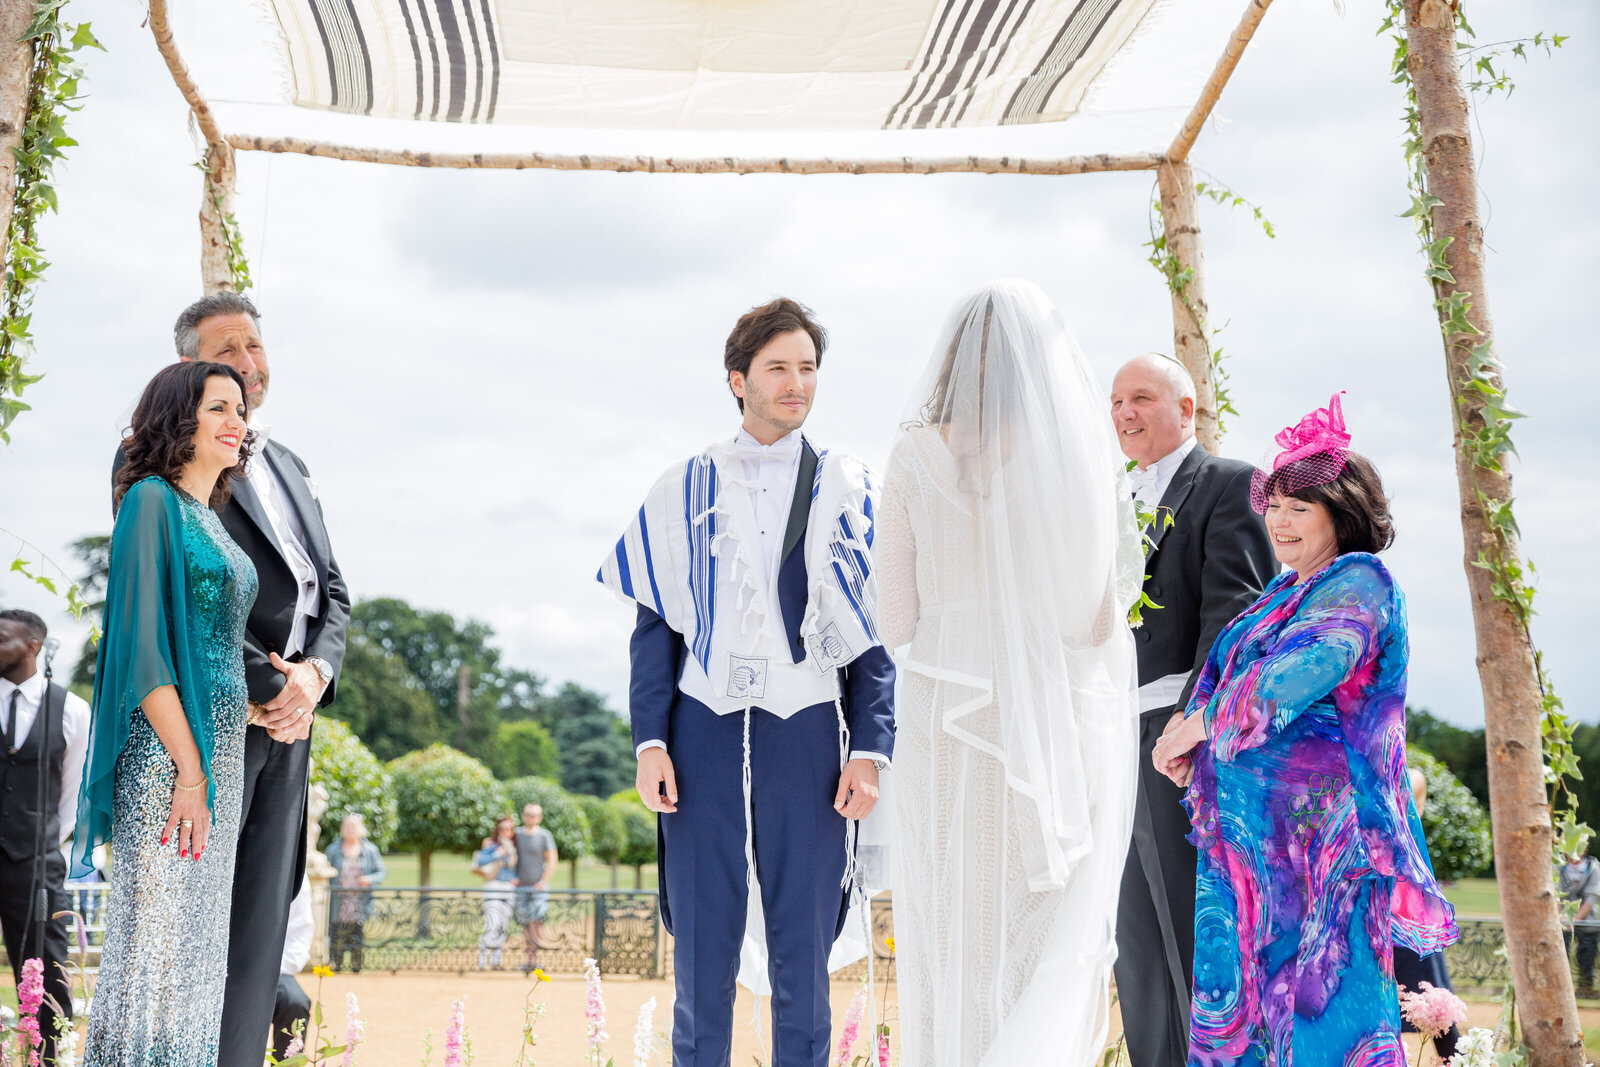 Jewish wedding ceremony at Wrest Park